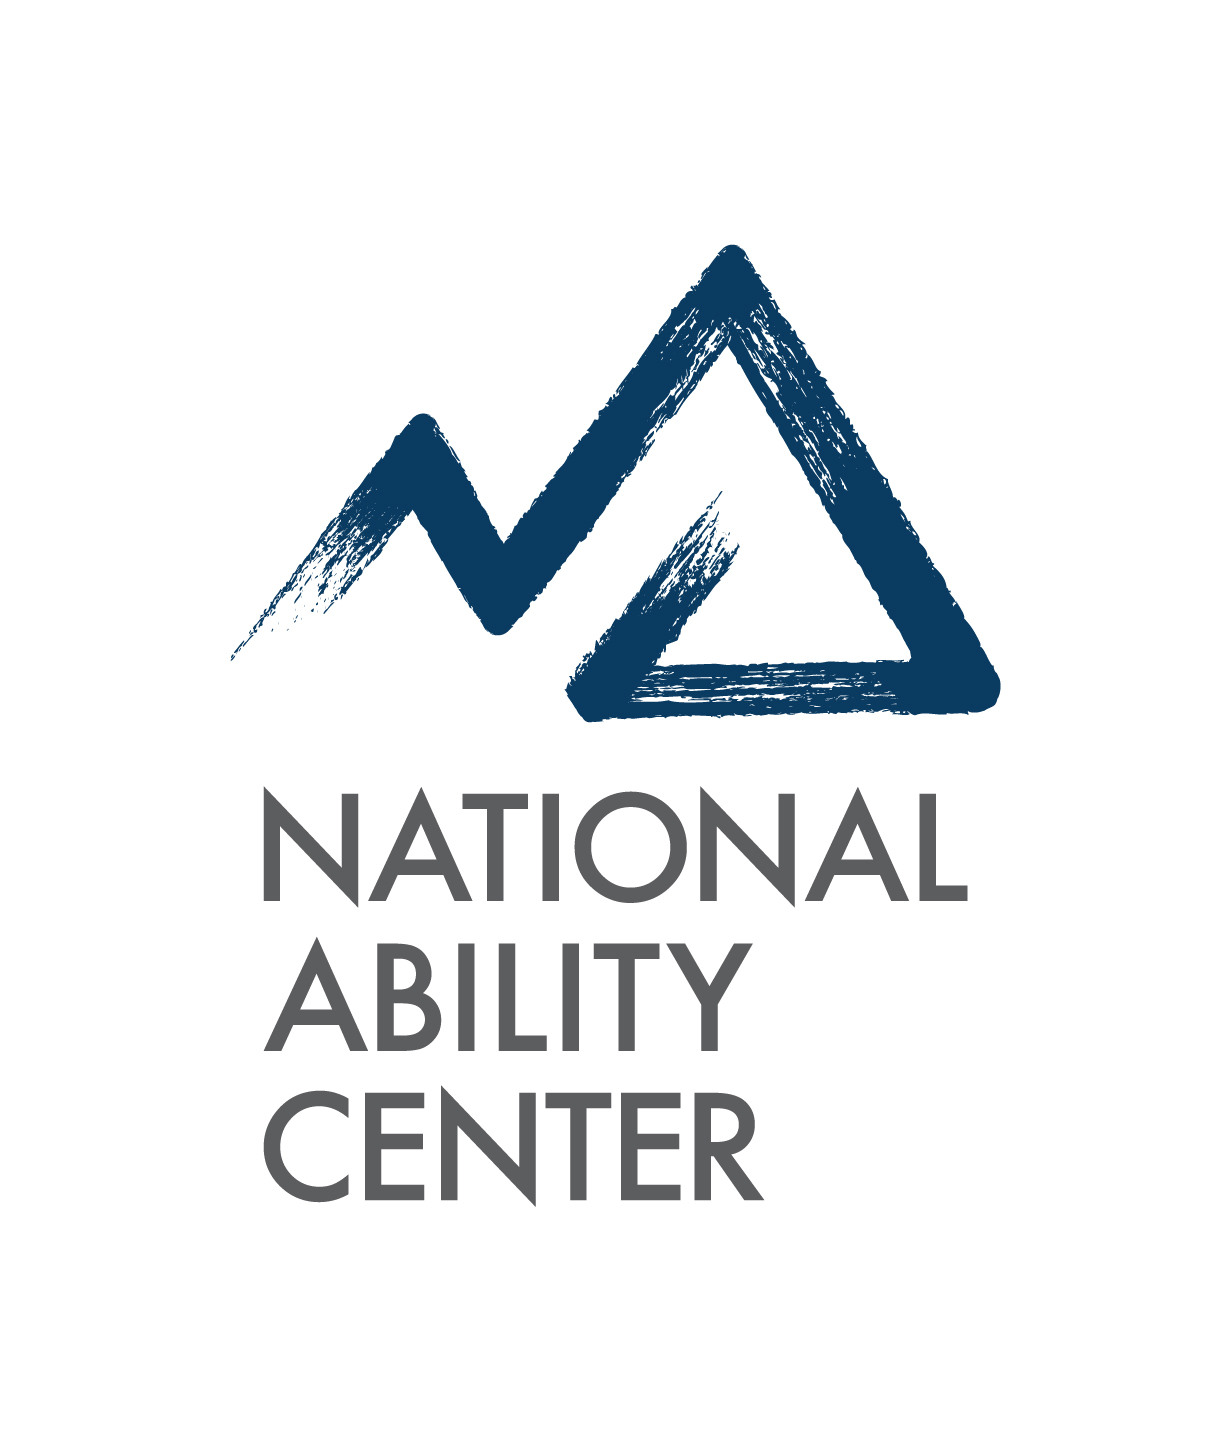 National Ability Center logo